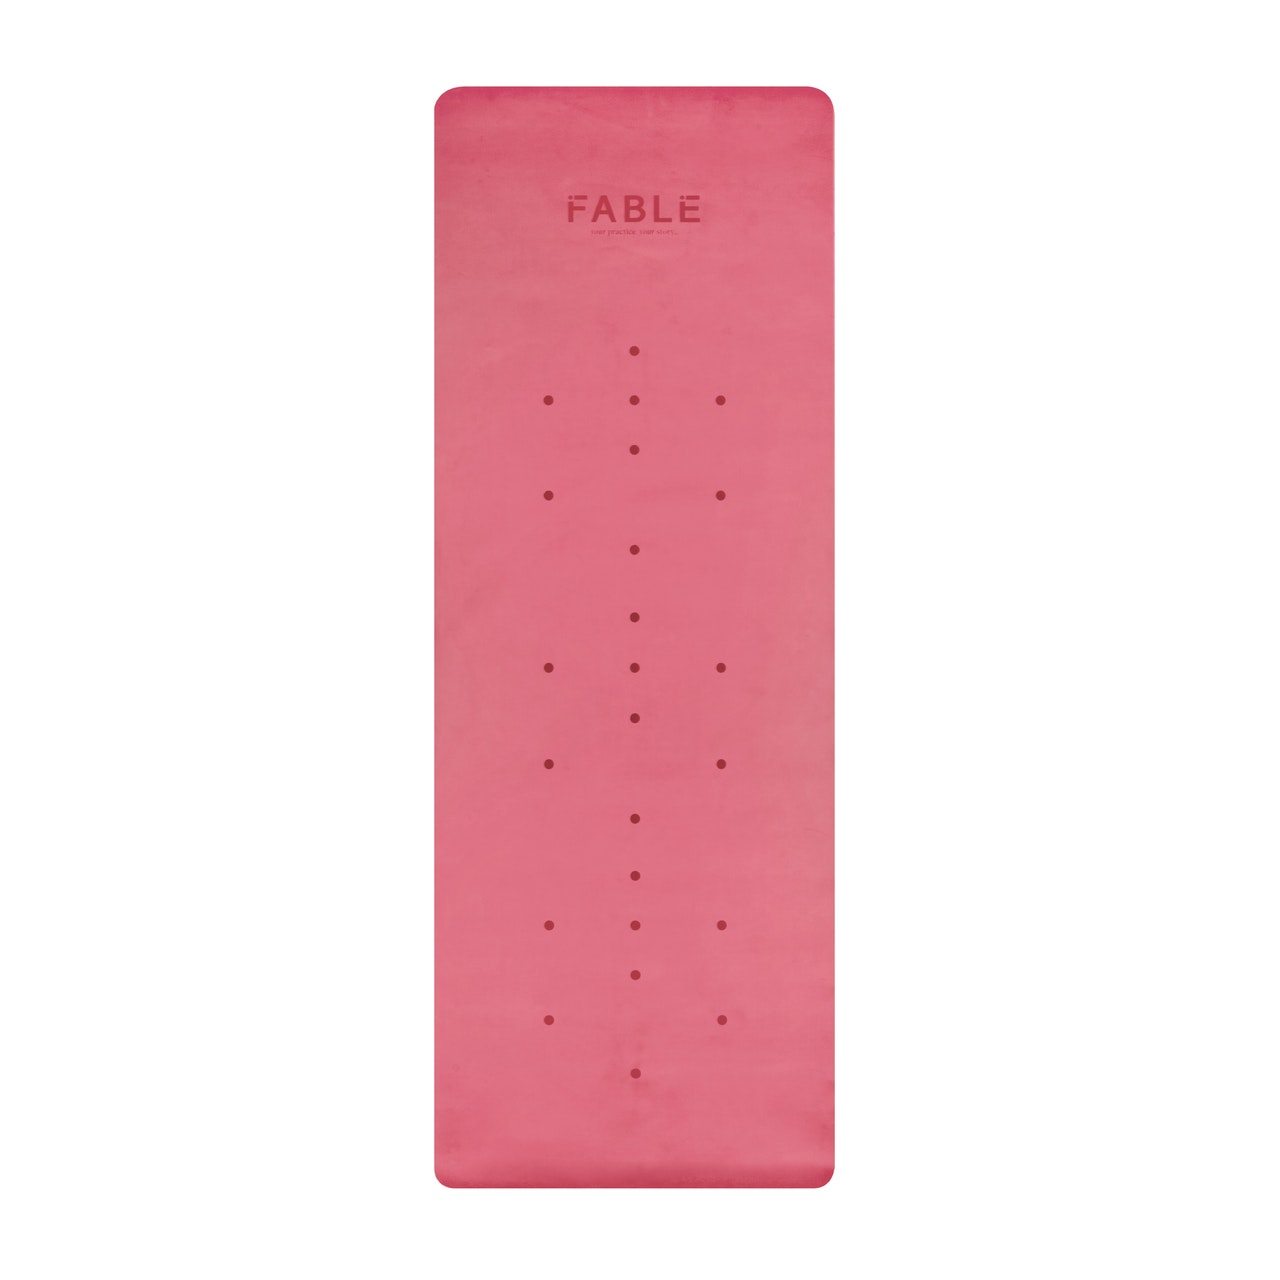 Fable Yoga Pro 4mm Pro Studio Yoga Mat - Rose Pink